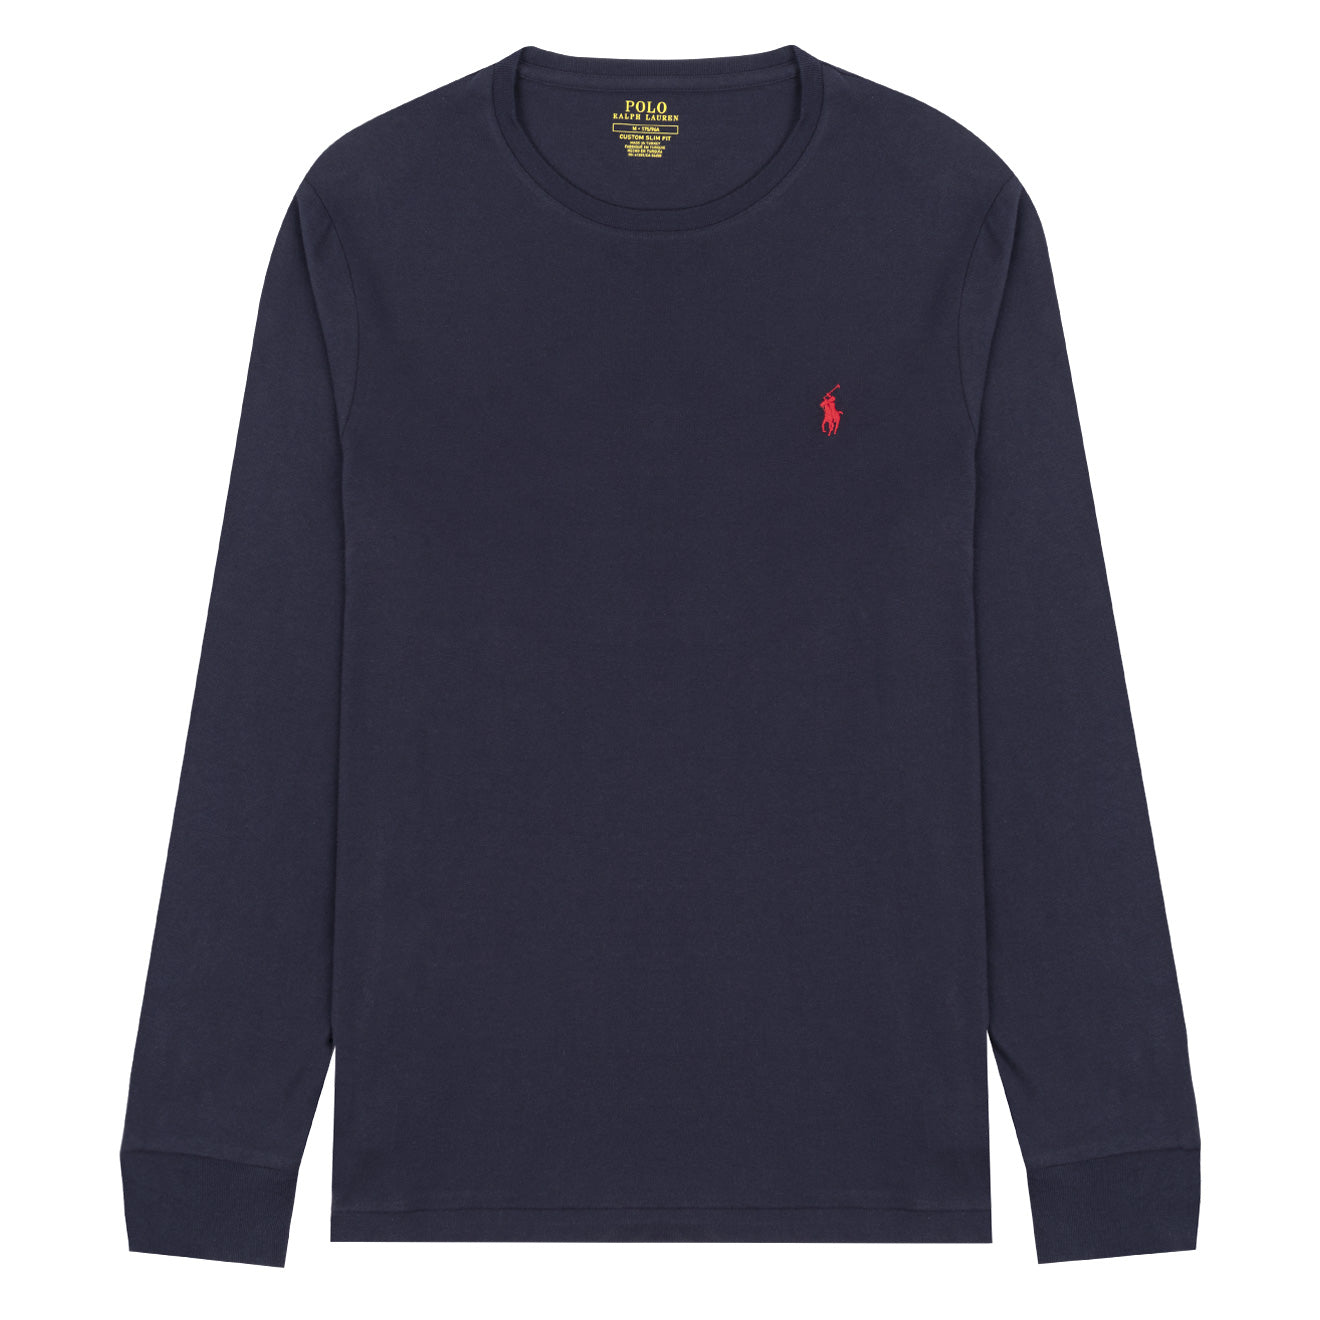 Polo Ralph Lauren Custom Slim Fit Cotton LS T-Shirt Ink Navy | The ...